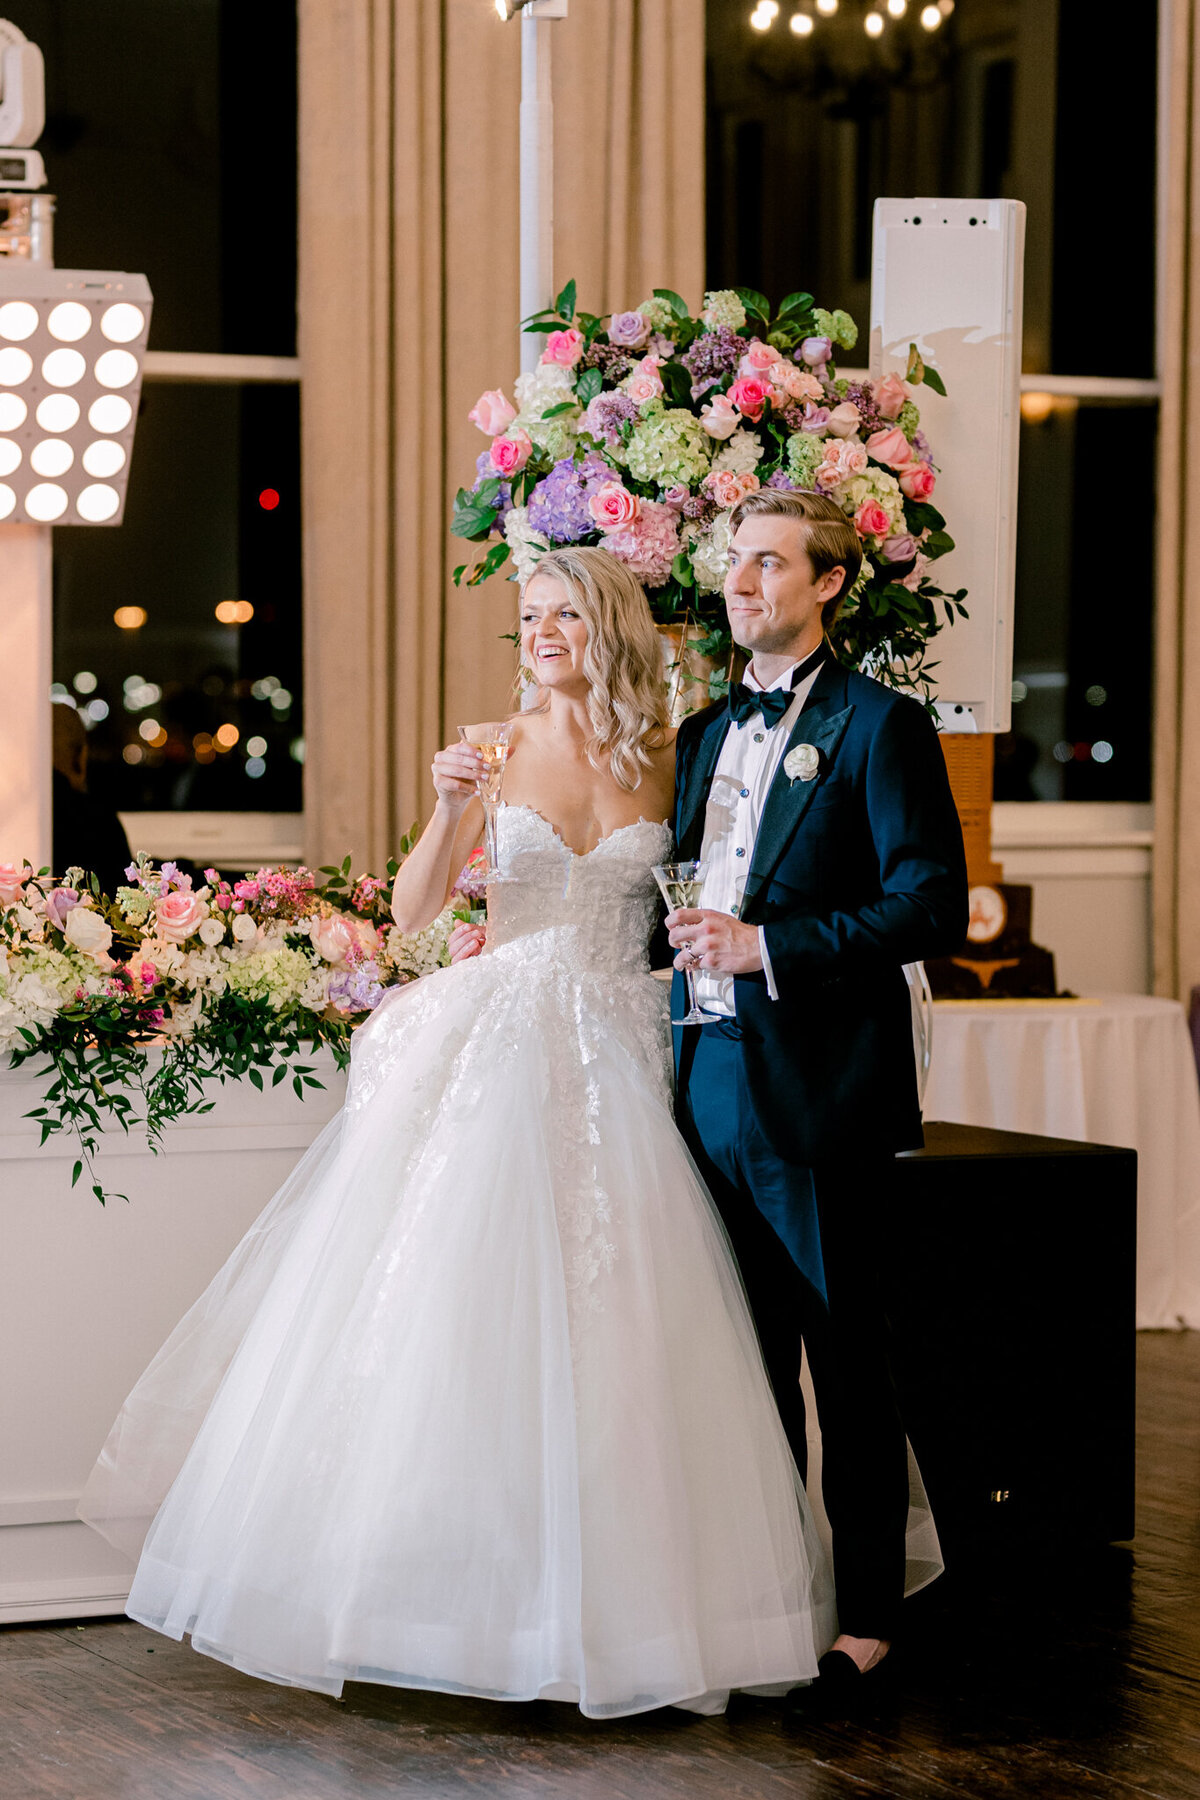 Shelby & Thomas's Wedding at HPUMC The Room on Main | Dallas Wedding Photographer | Sami Kathryn Photography-205